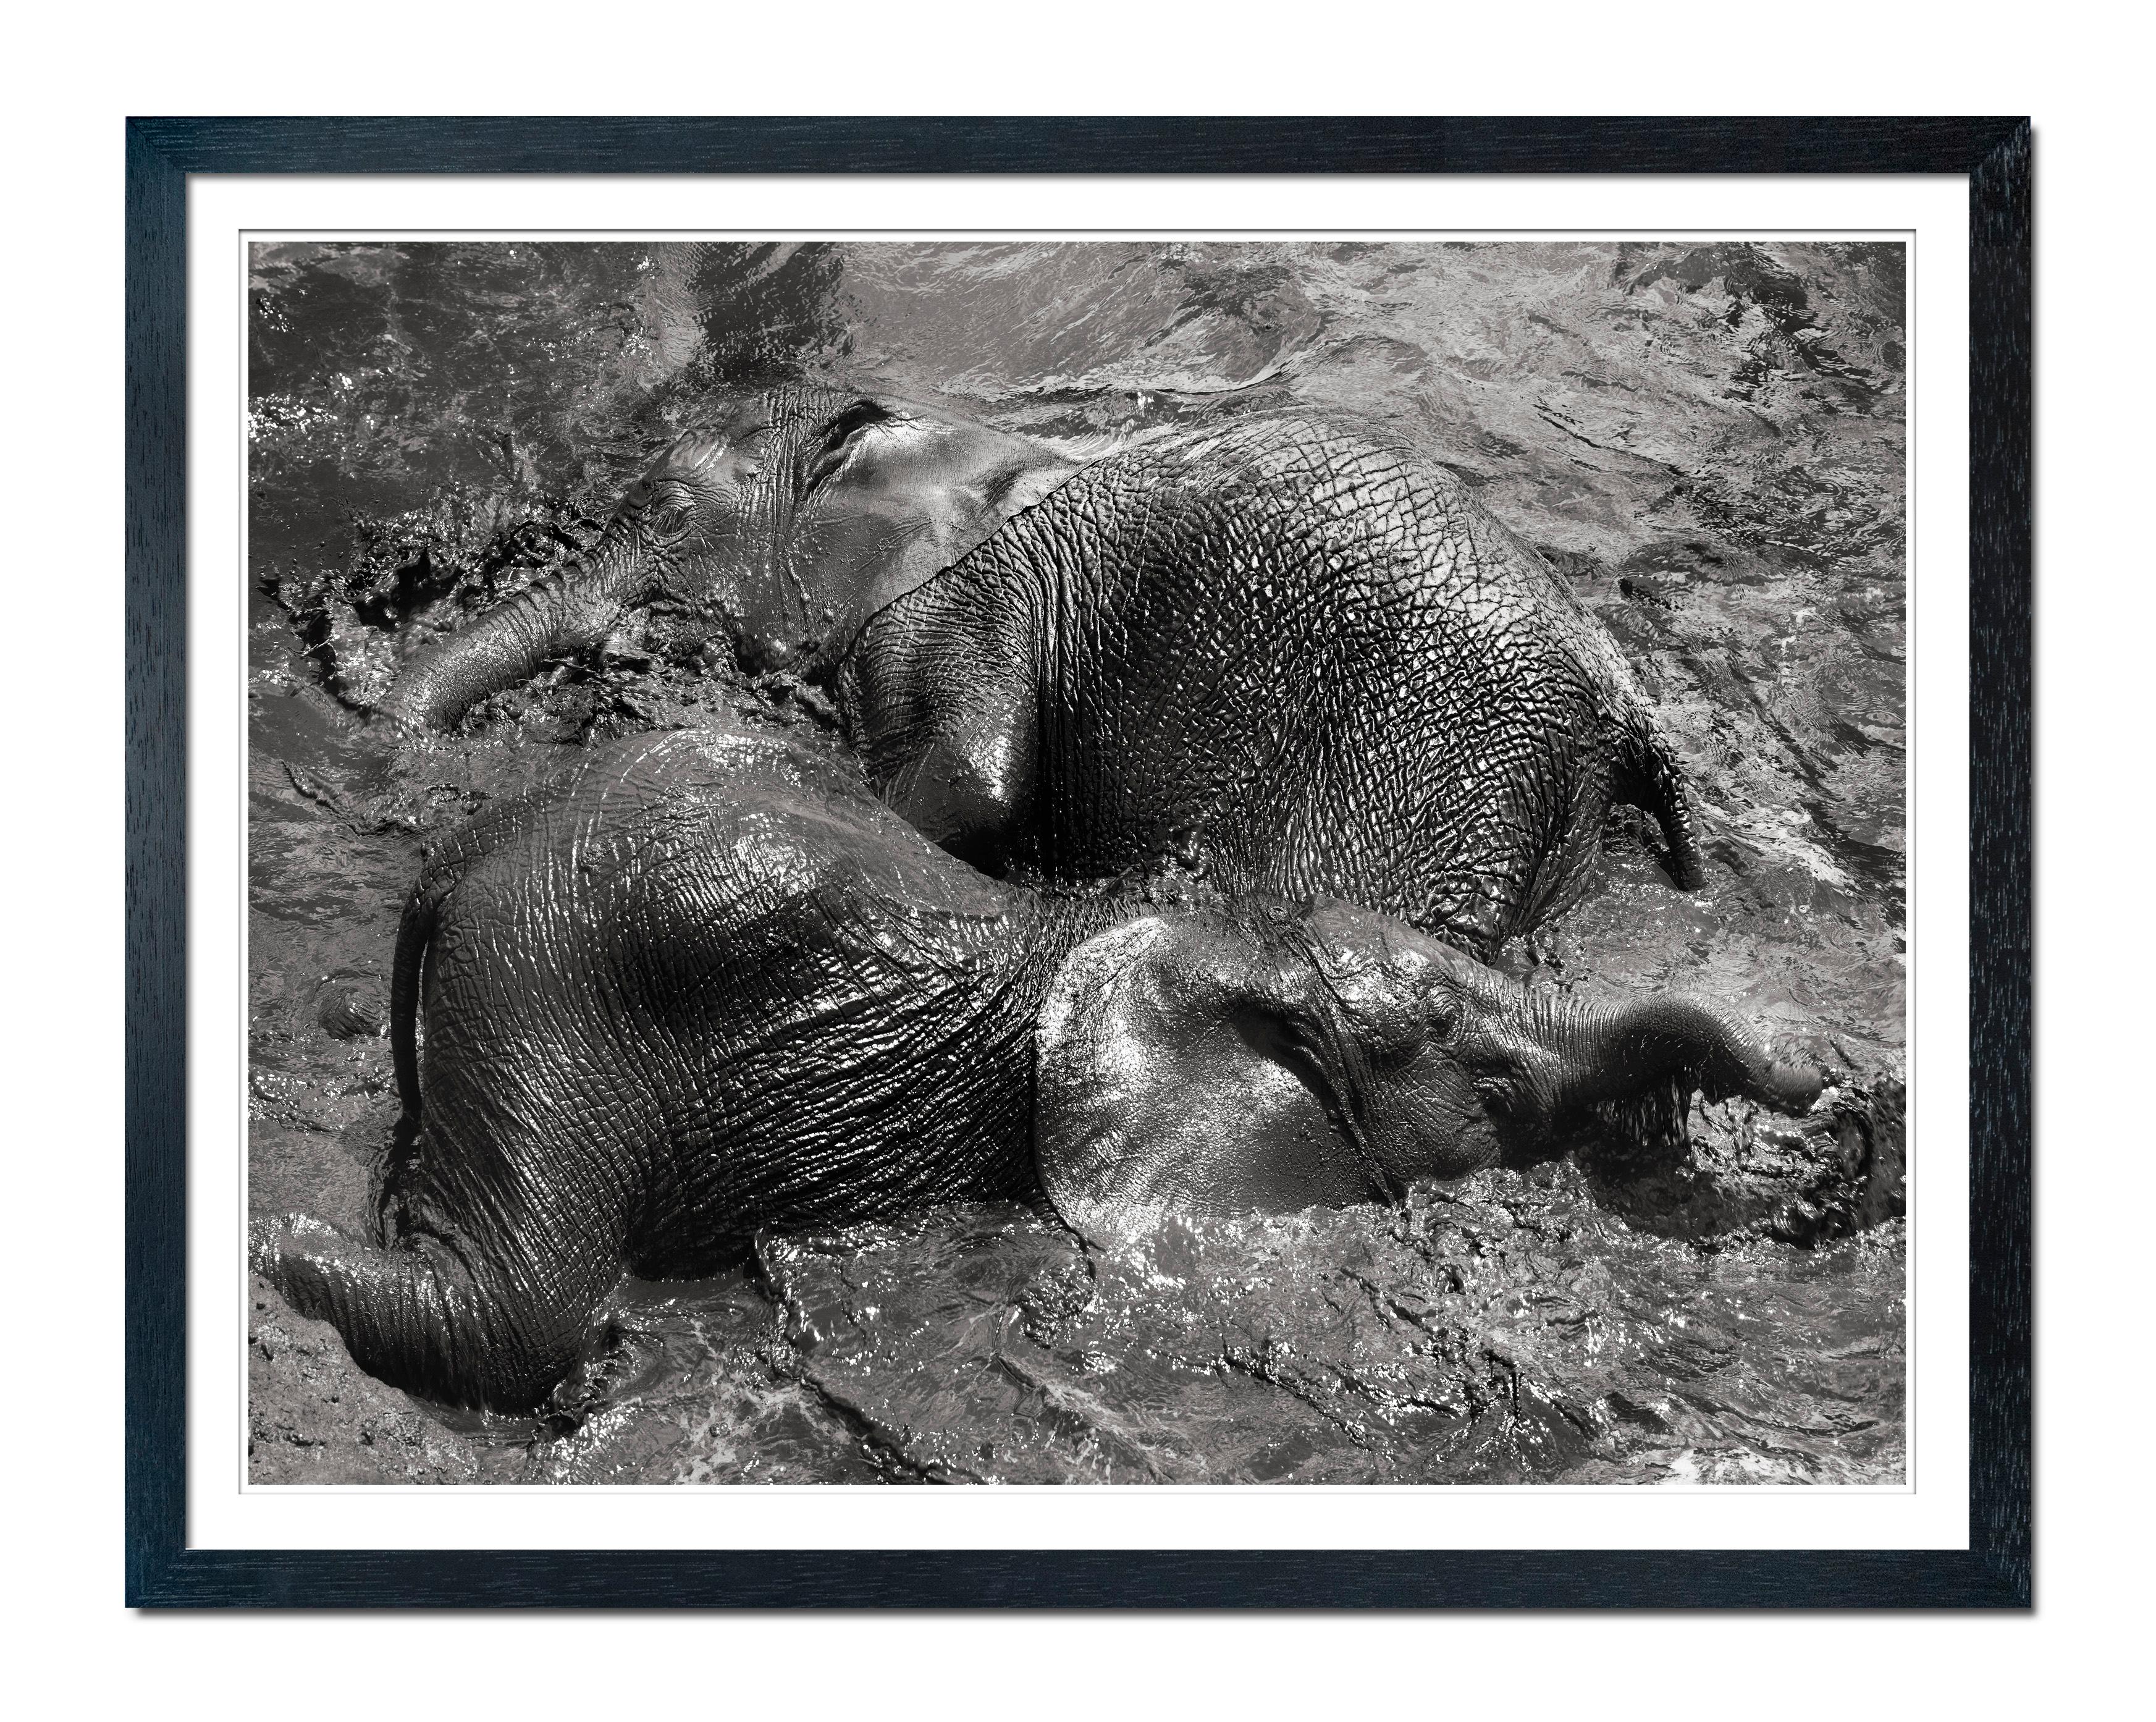 Mudbath III, Elephant, animal, wildlife, black and white photography, africa - Photograph by Joachim Schmeisser